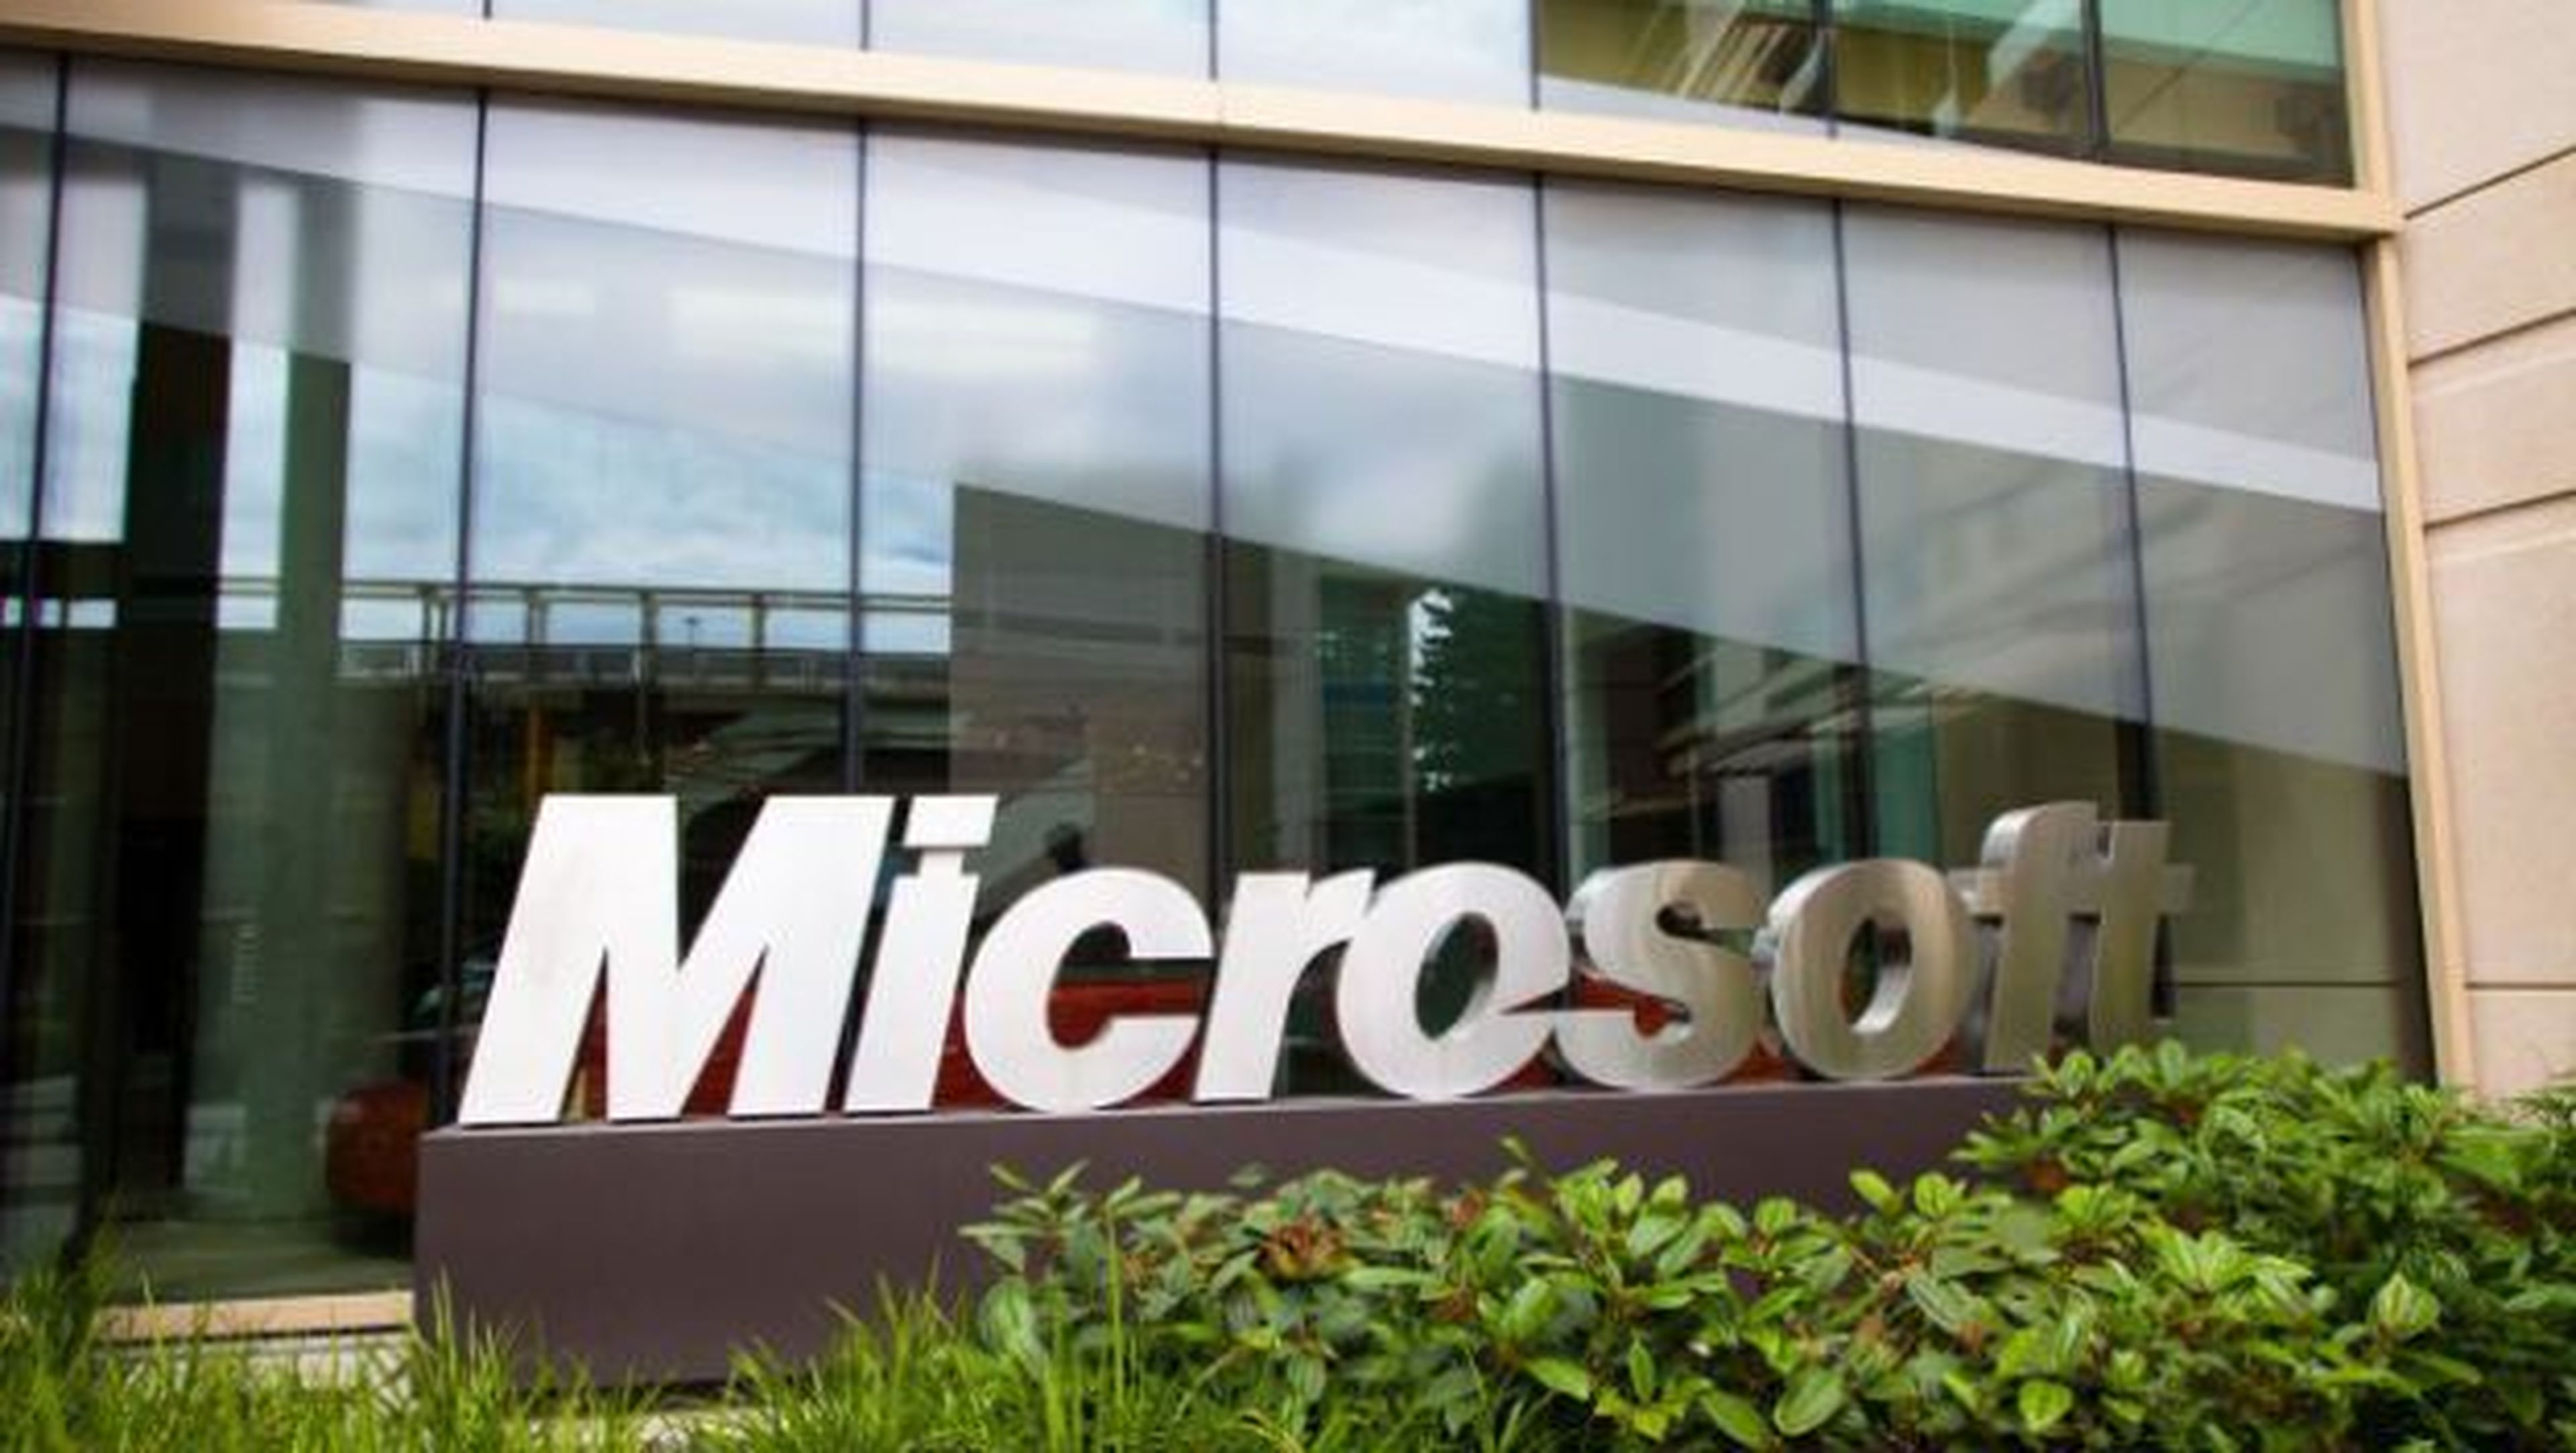 Microsoft contrata personas autistas